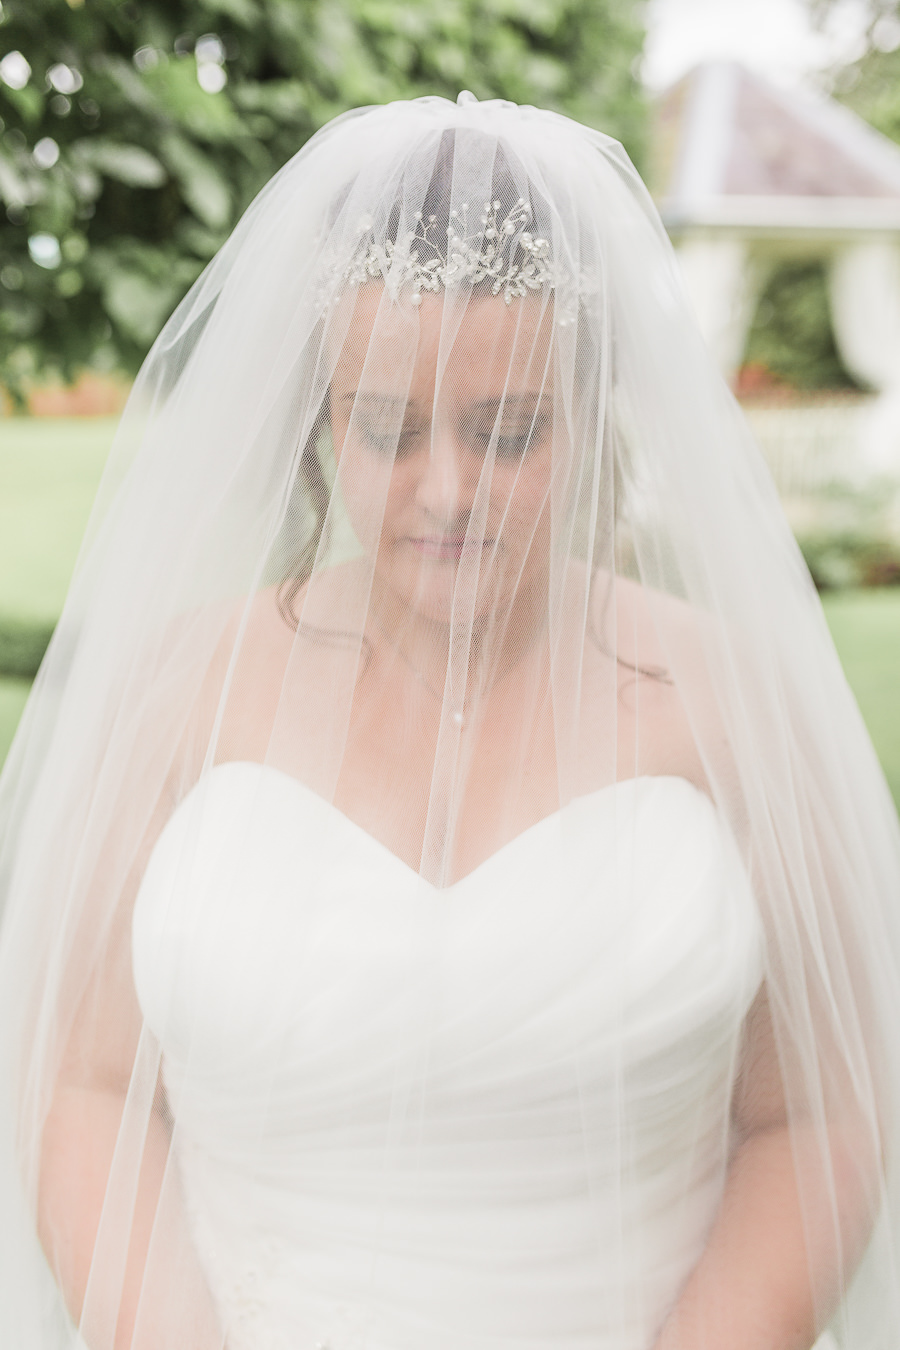 Hayley Morris Photography Lemore Manor herefordshire Fine art wedding photographer bride portrait